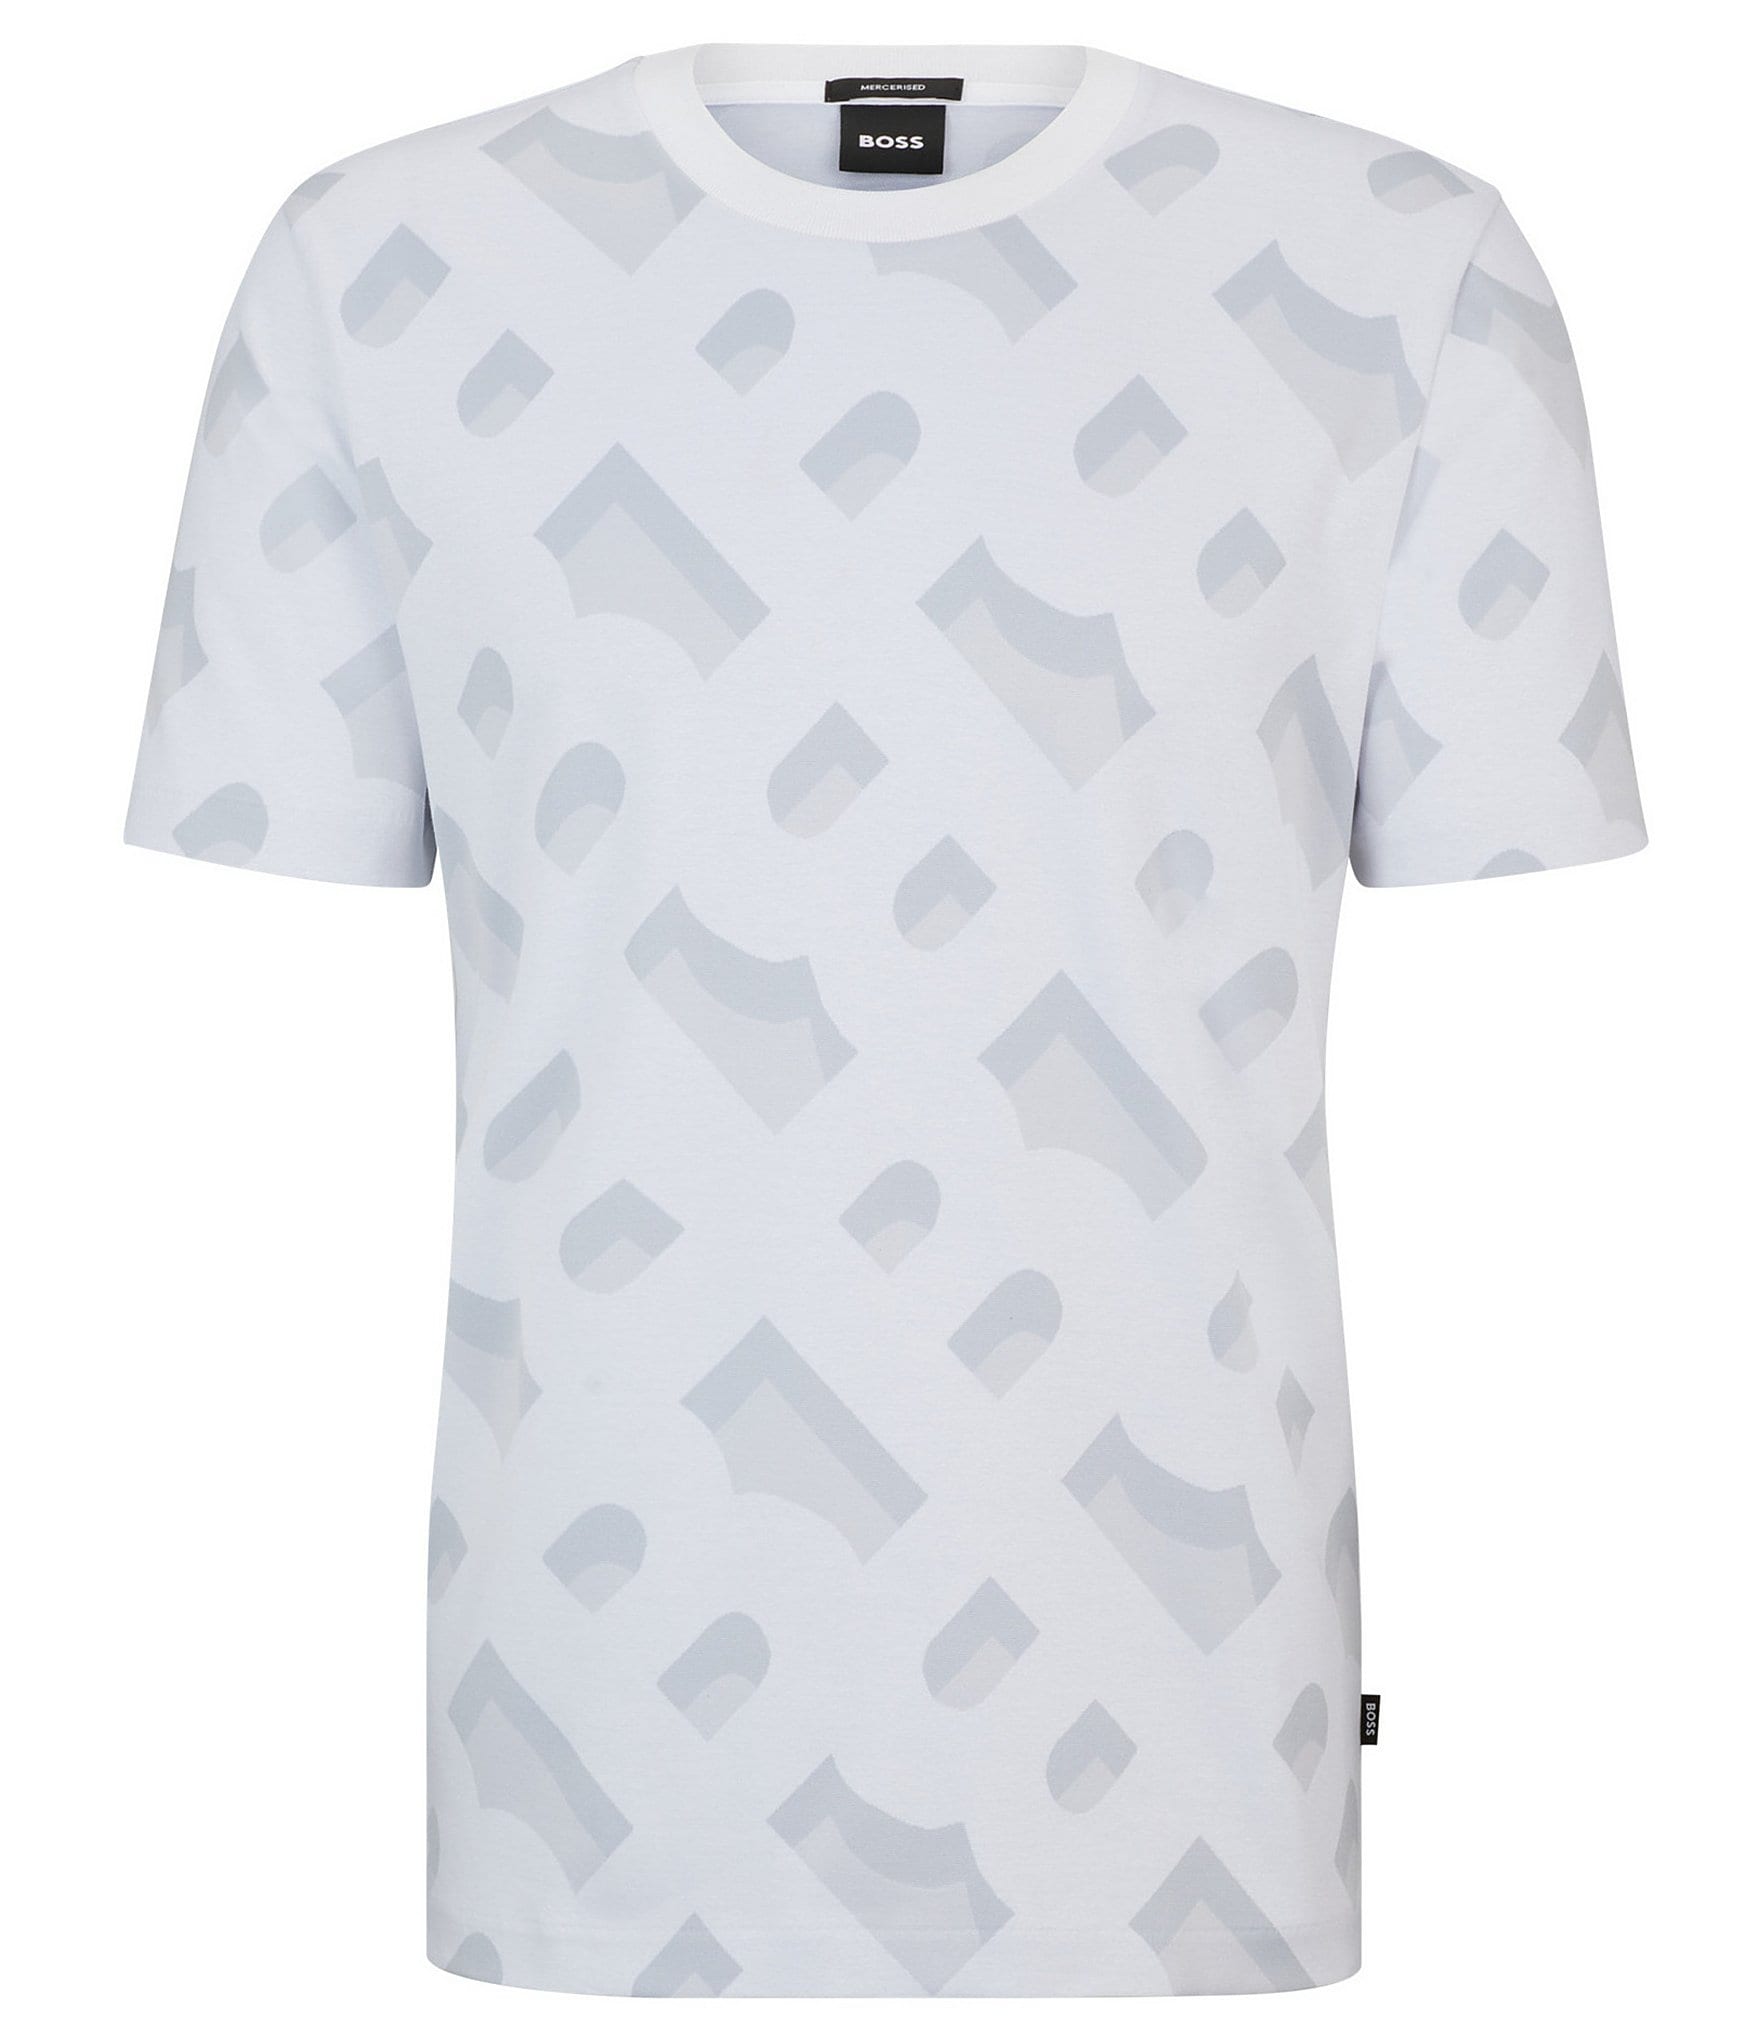 Hugo Boss BOSS Tiburt 419 Short Sleeve T-Shirt | Dillard's